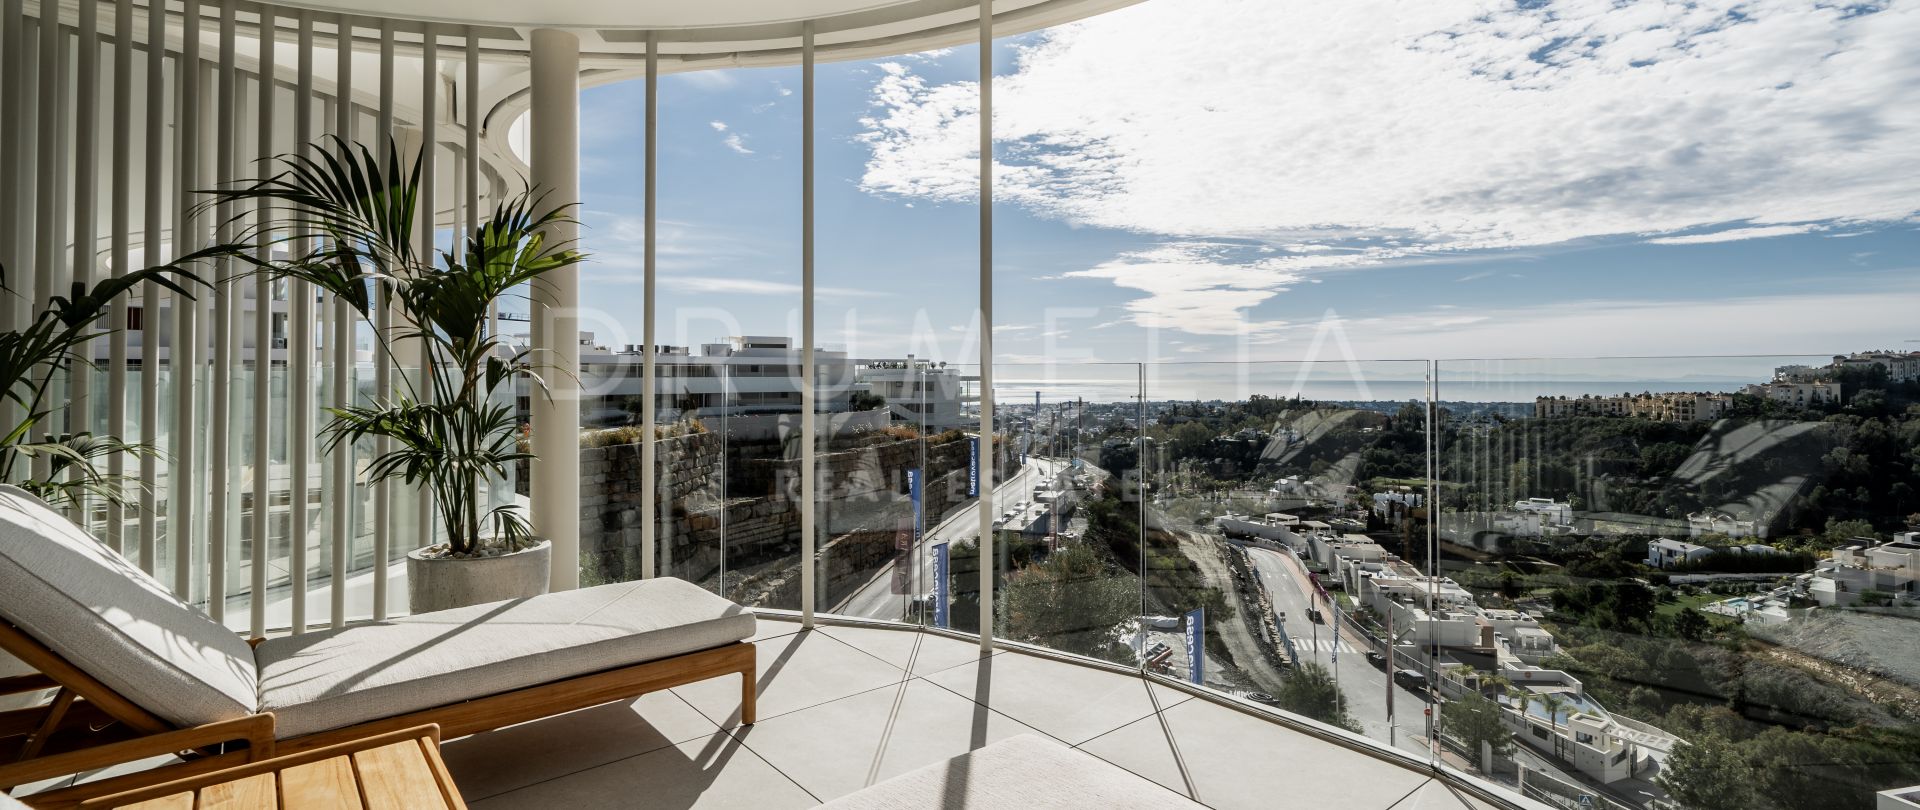 Роскошная современная квартира с панорамным видом на море в комплексе The View Marbella